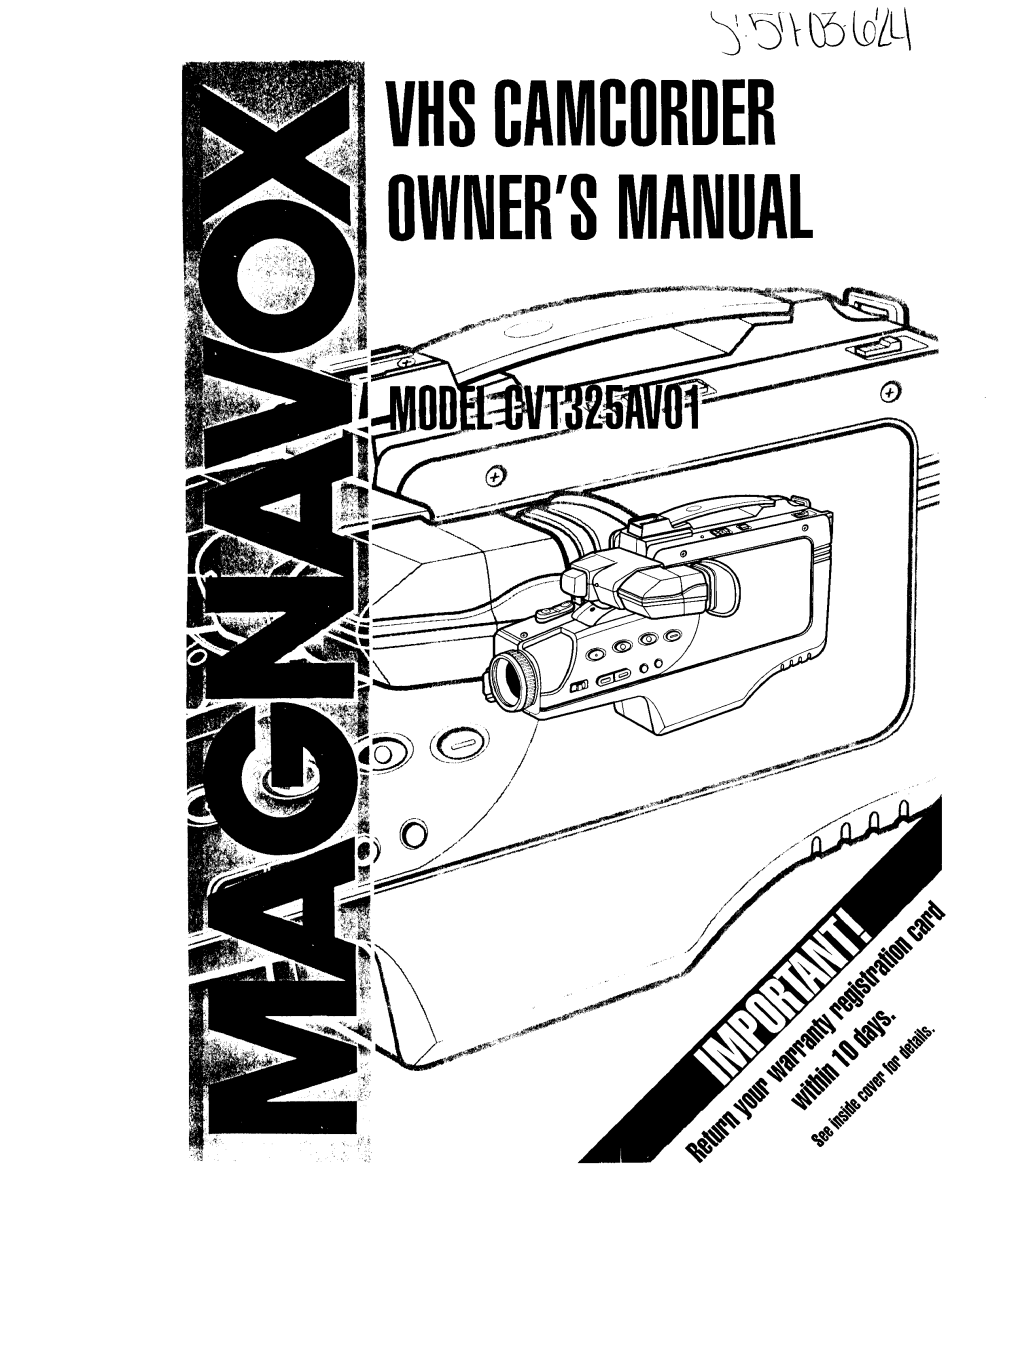 VHSCAMCOROER OWHER'smahual MAGNAVOX Smart.Very Smart